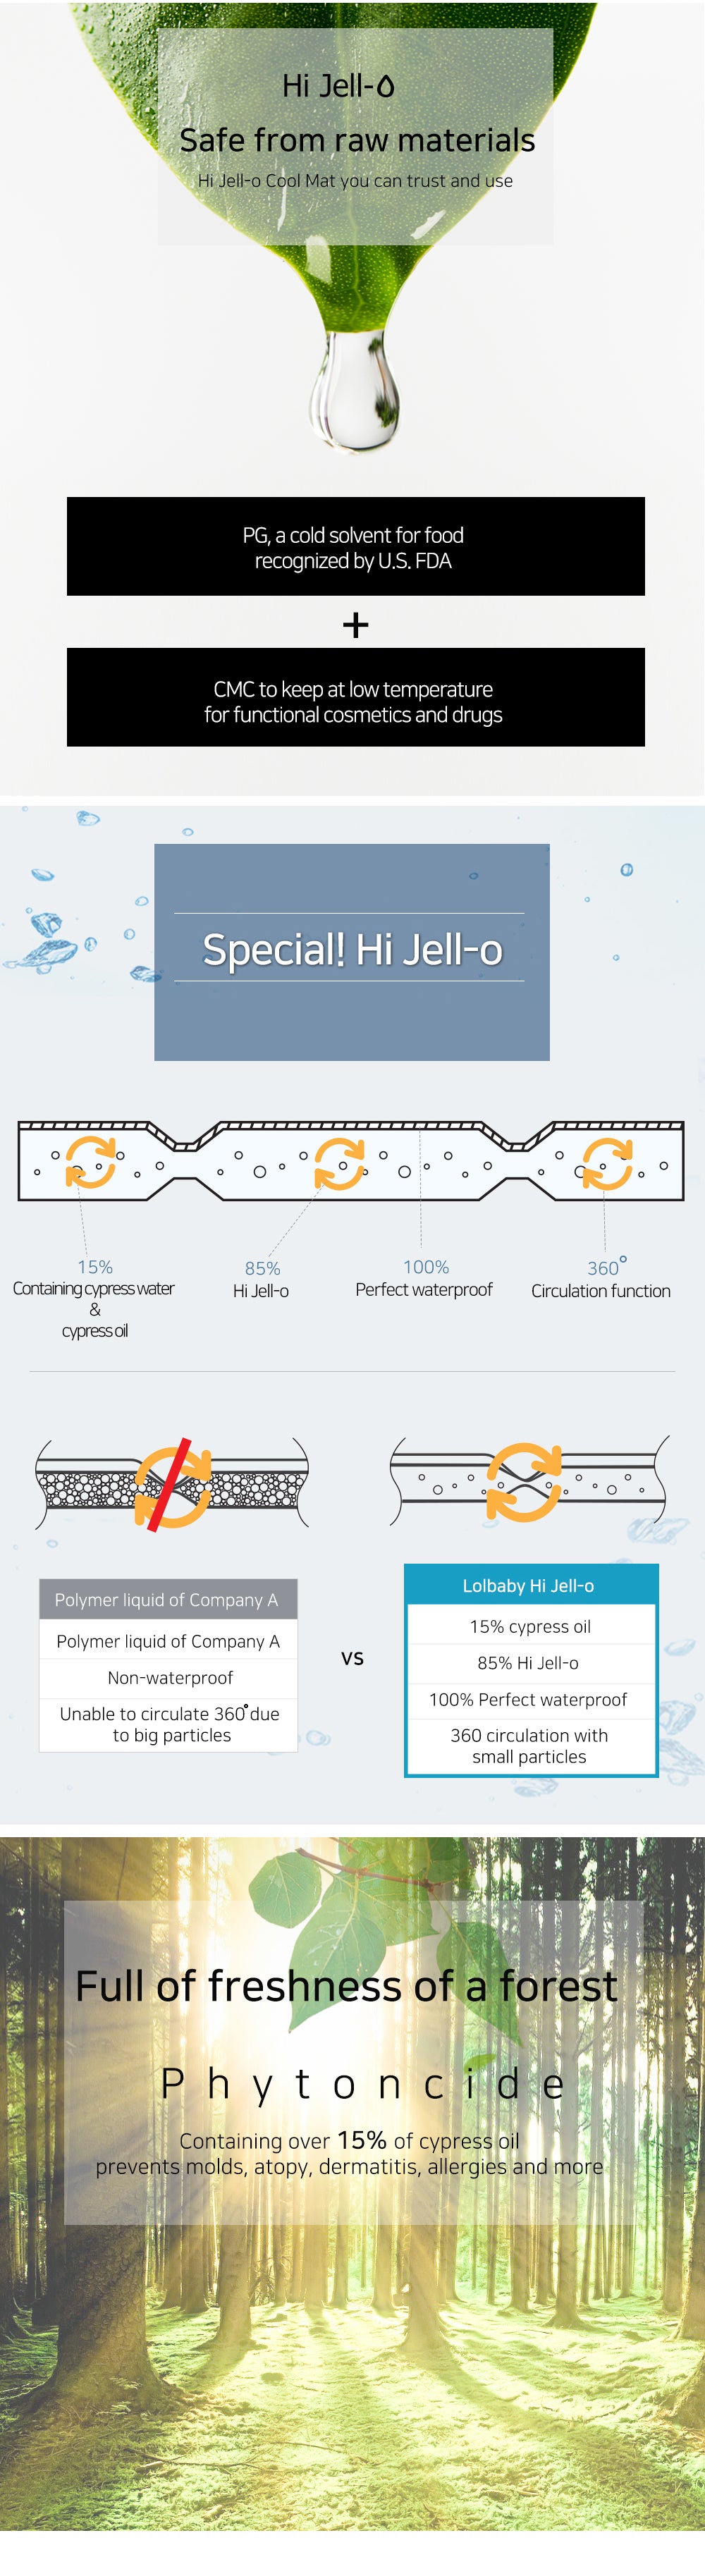 Hi Jell-o Cooling Mat